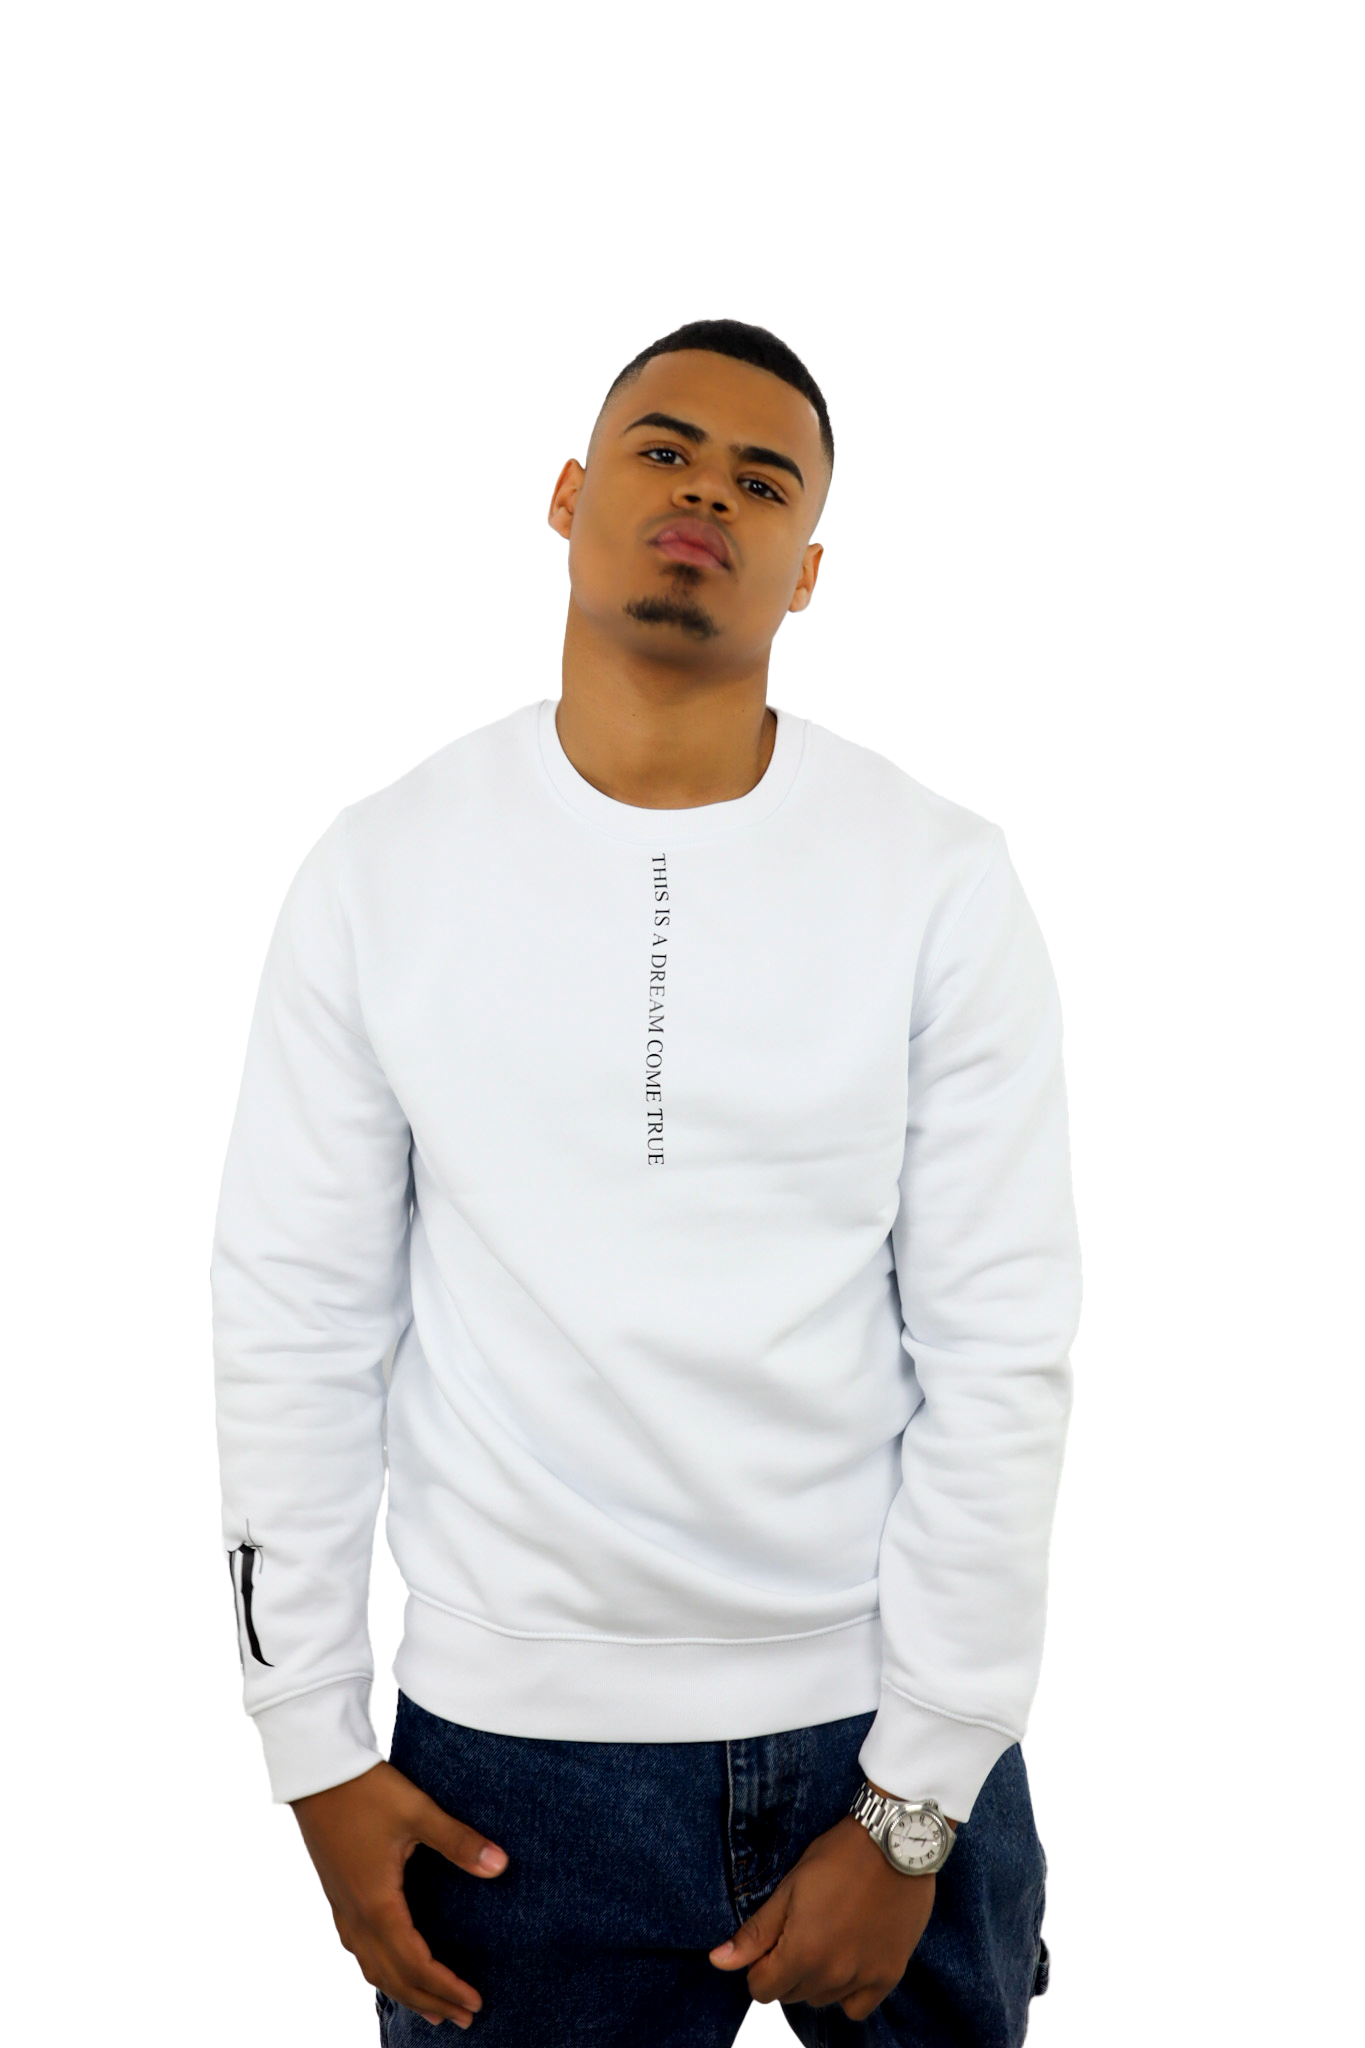 Selection M white sweatshirt